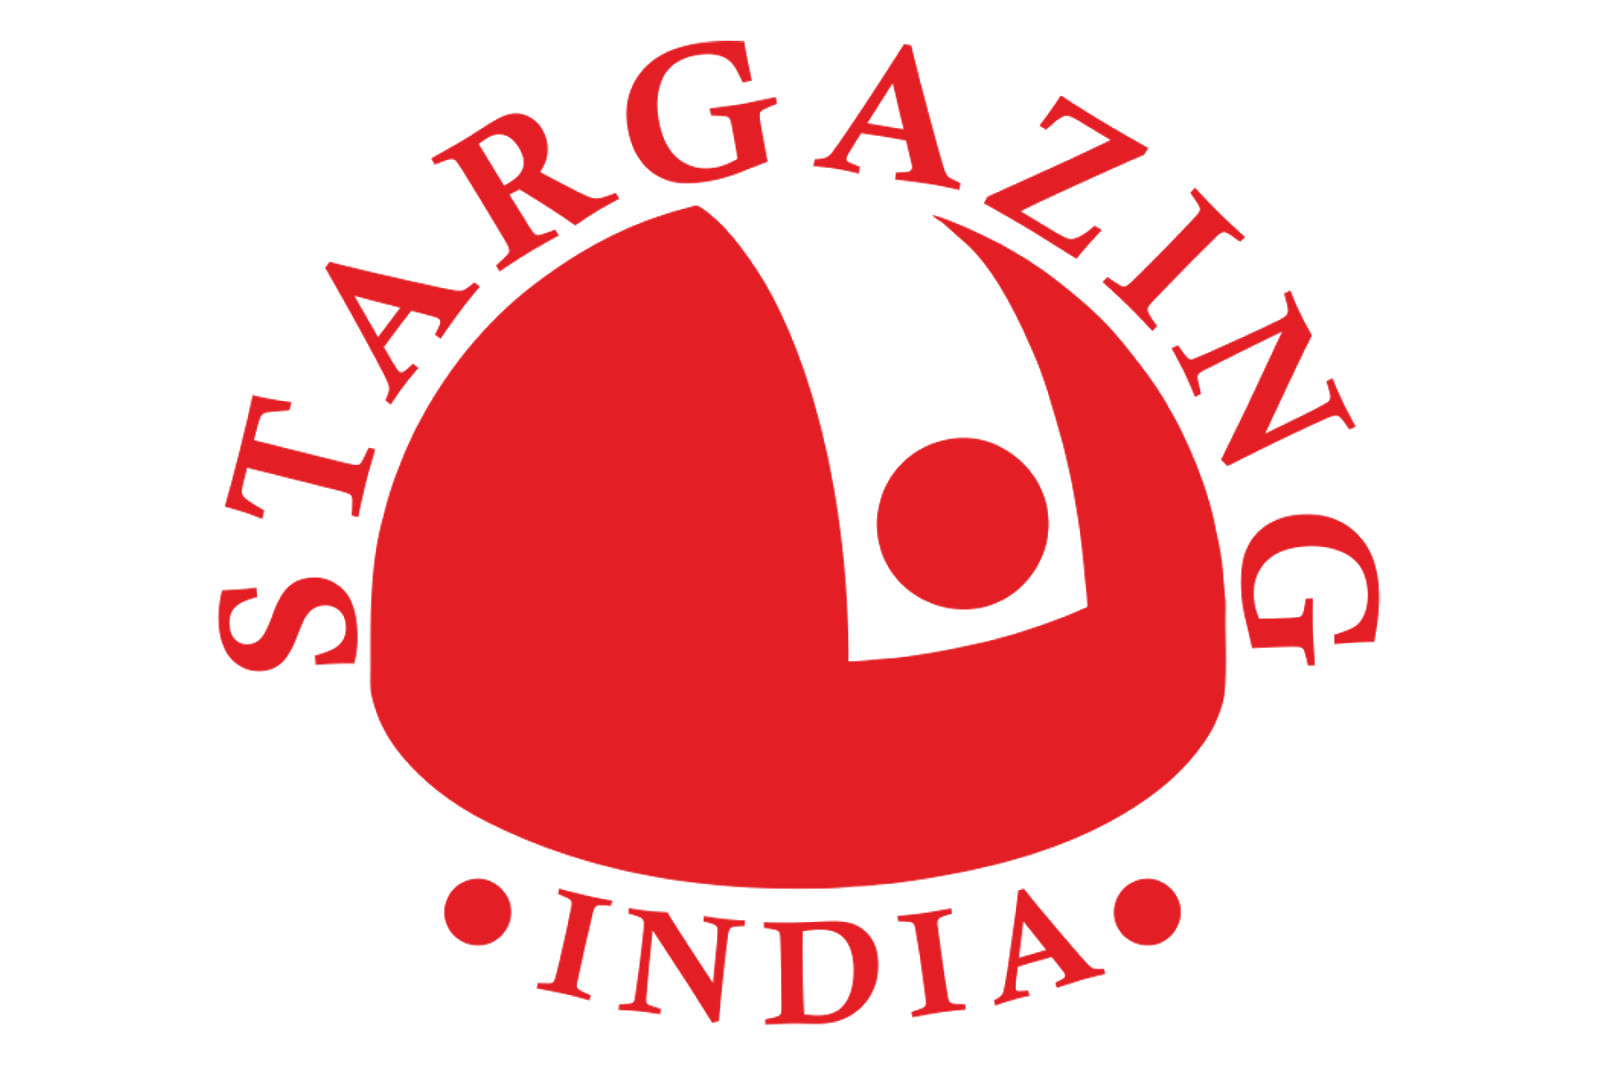 Stargazing India